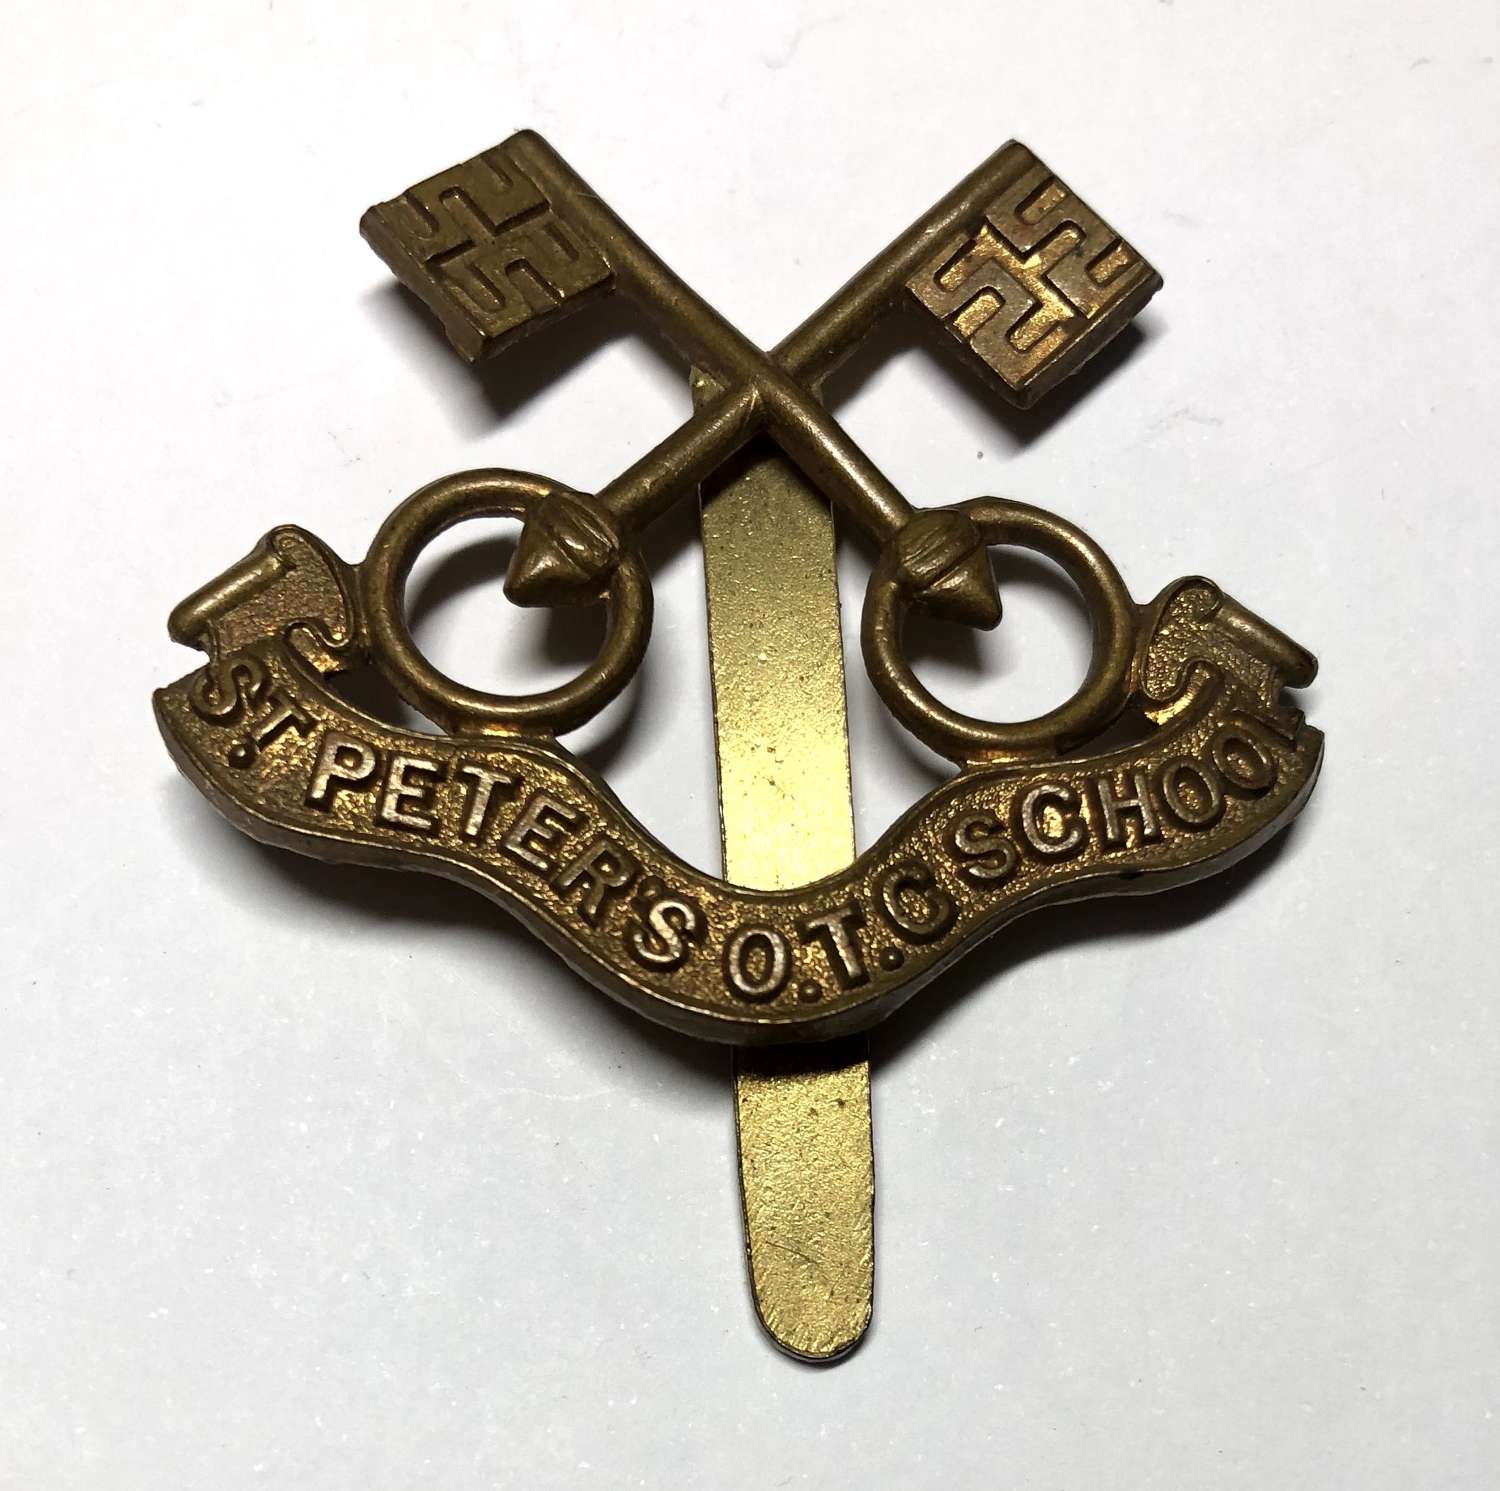 St. Peter's School OTC York 1st pattern 1908 cap badge